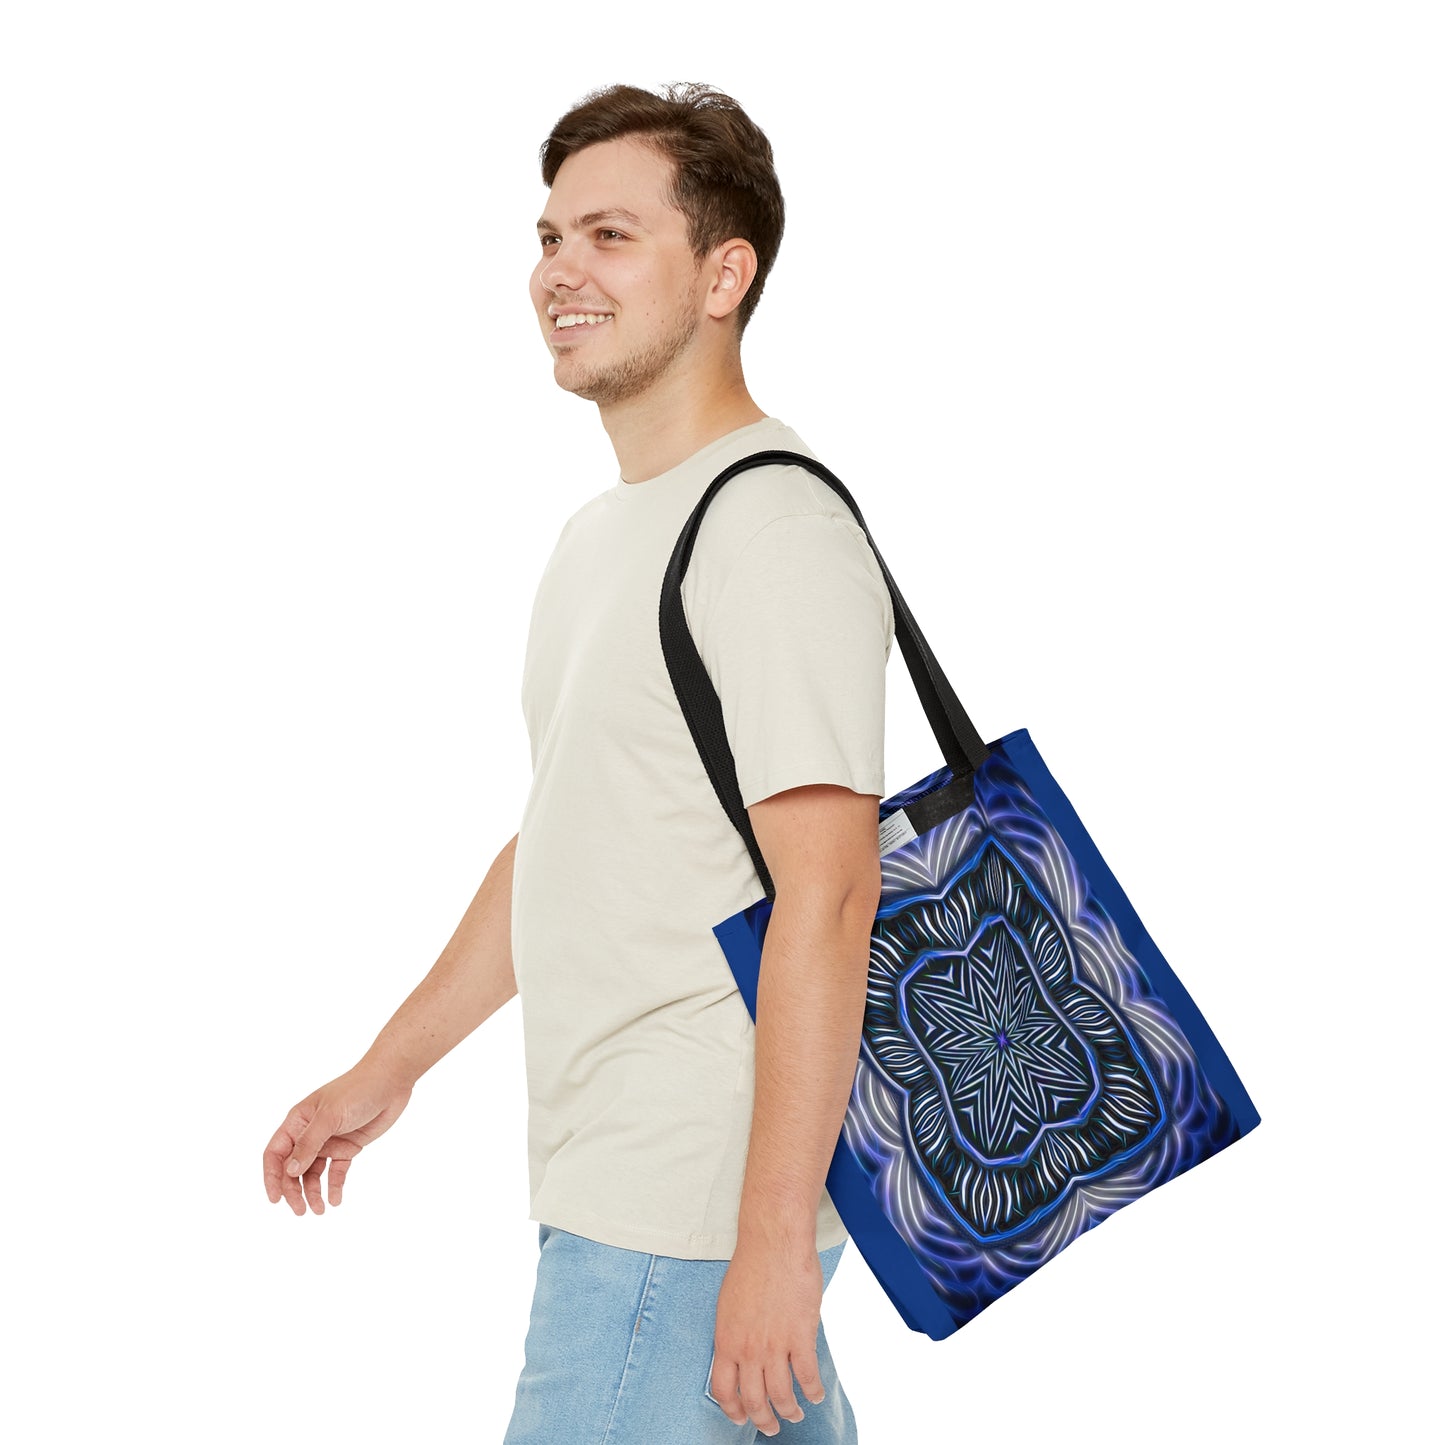 "Blue Electric" Panache Tote Bag